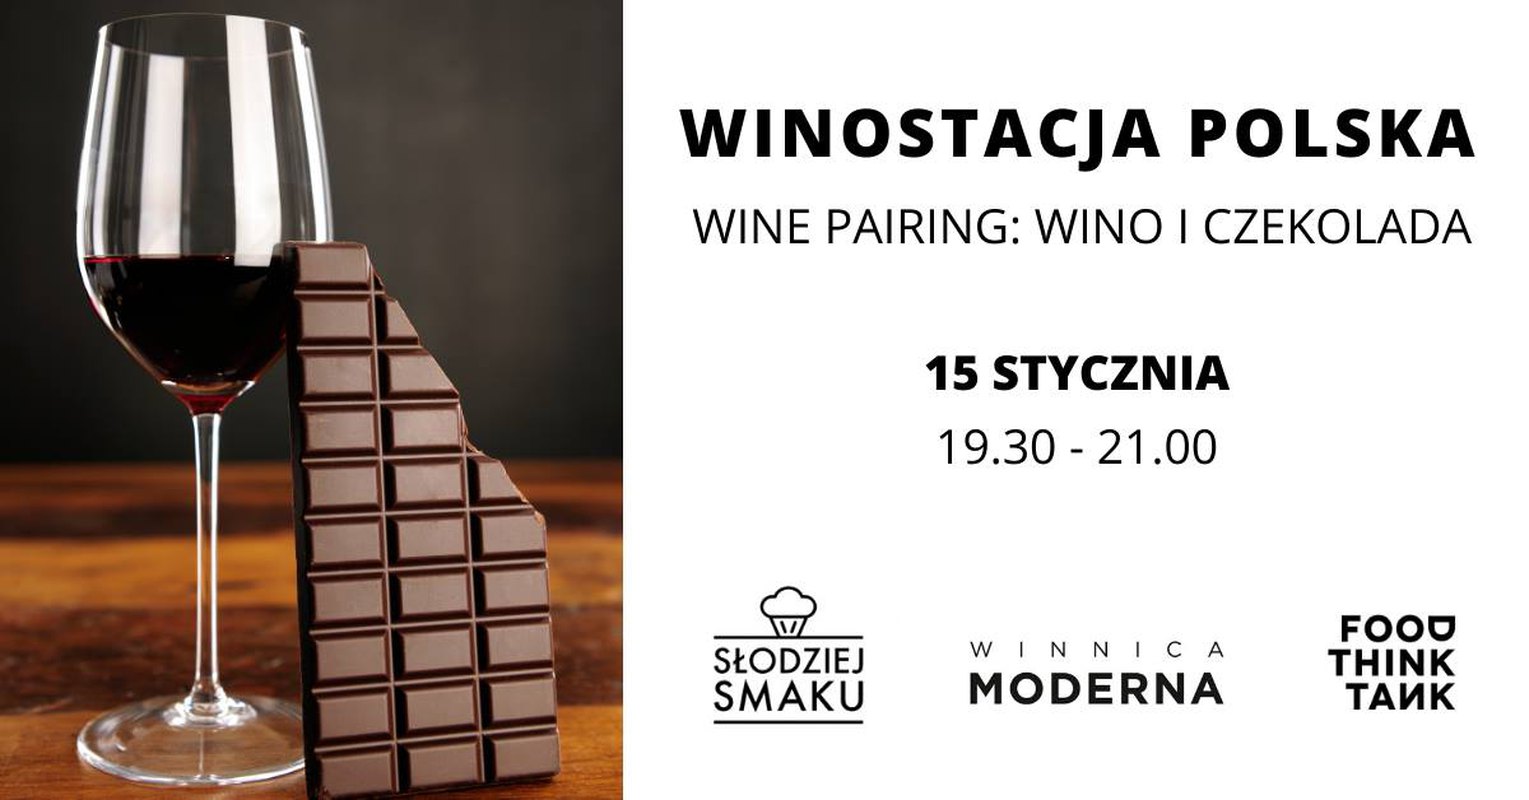 Winostacja Polska. Wine Pairing: Wino i czekolada